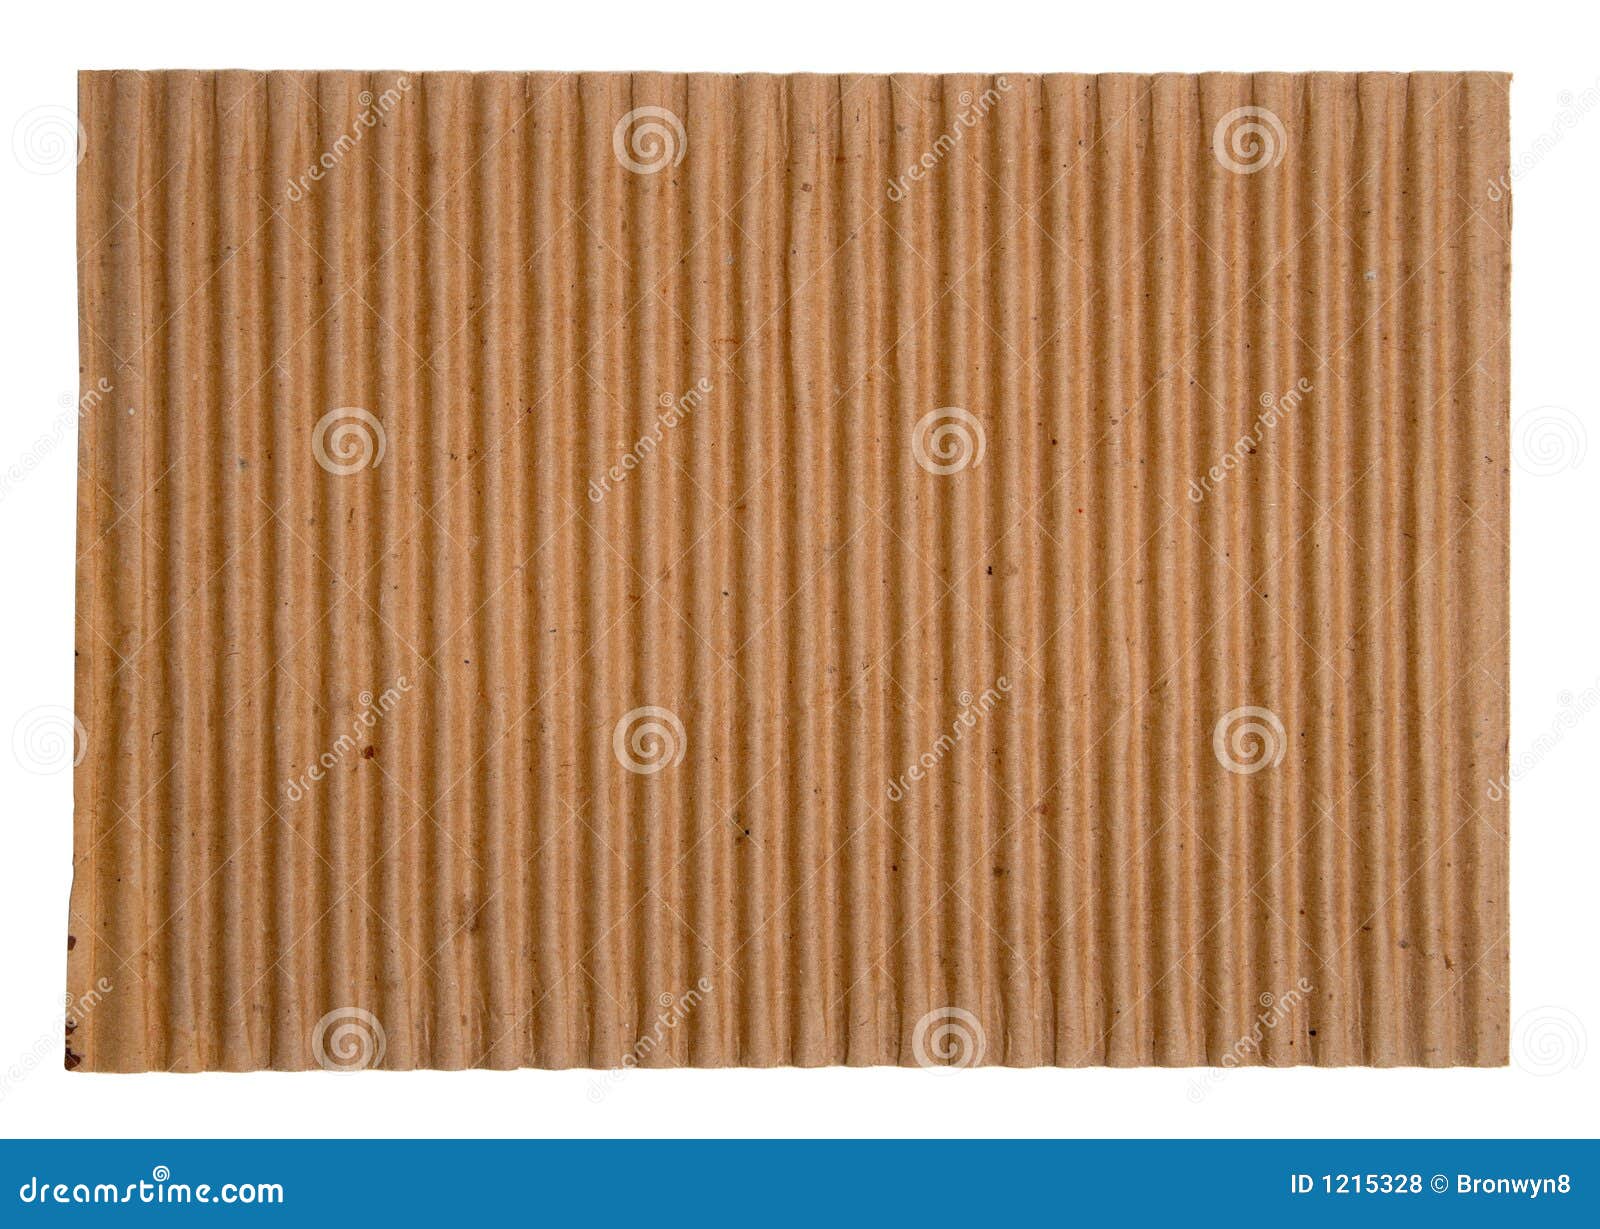 corrugated cardboard